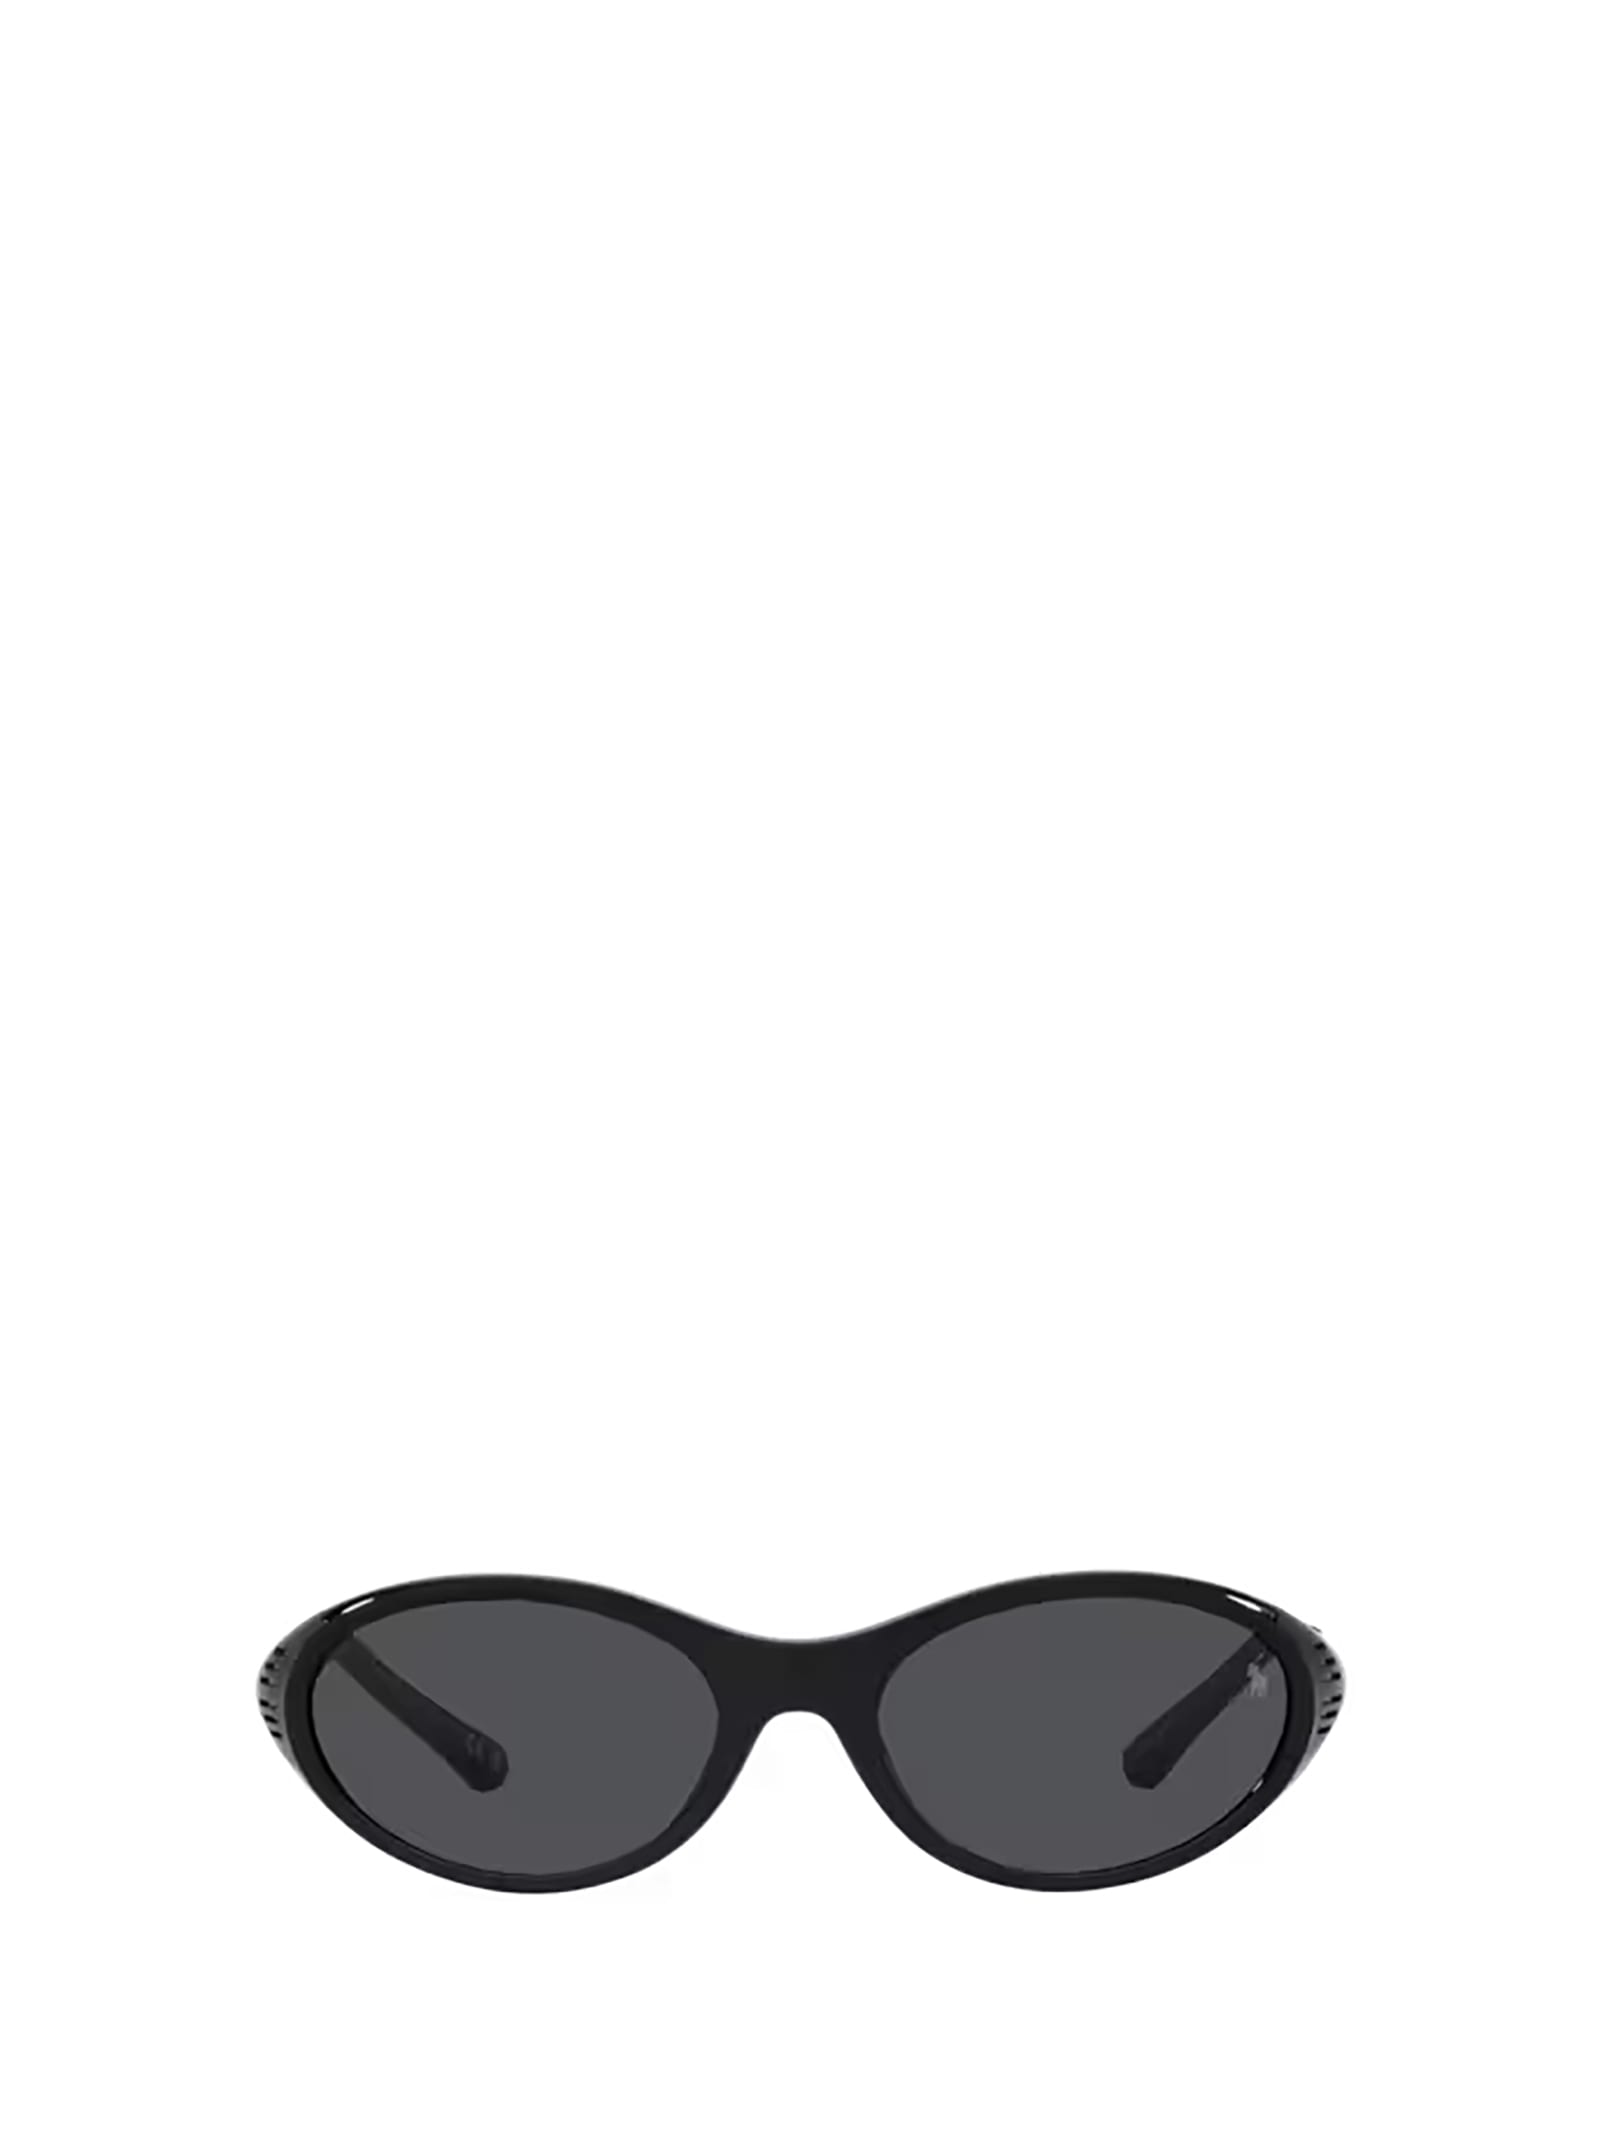 Polo Ralph Lauren Ph4197u Shiny Black Sunglasses